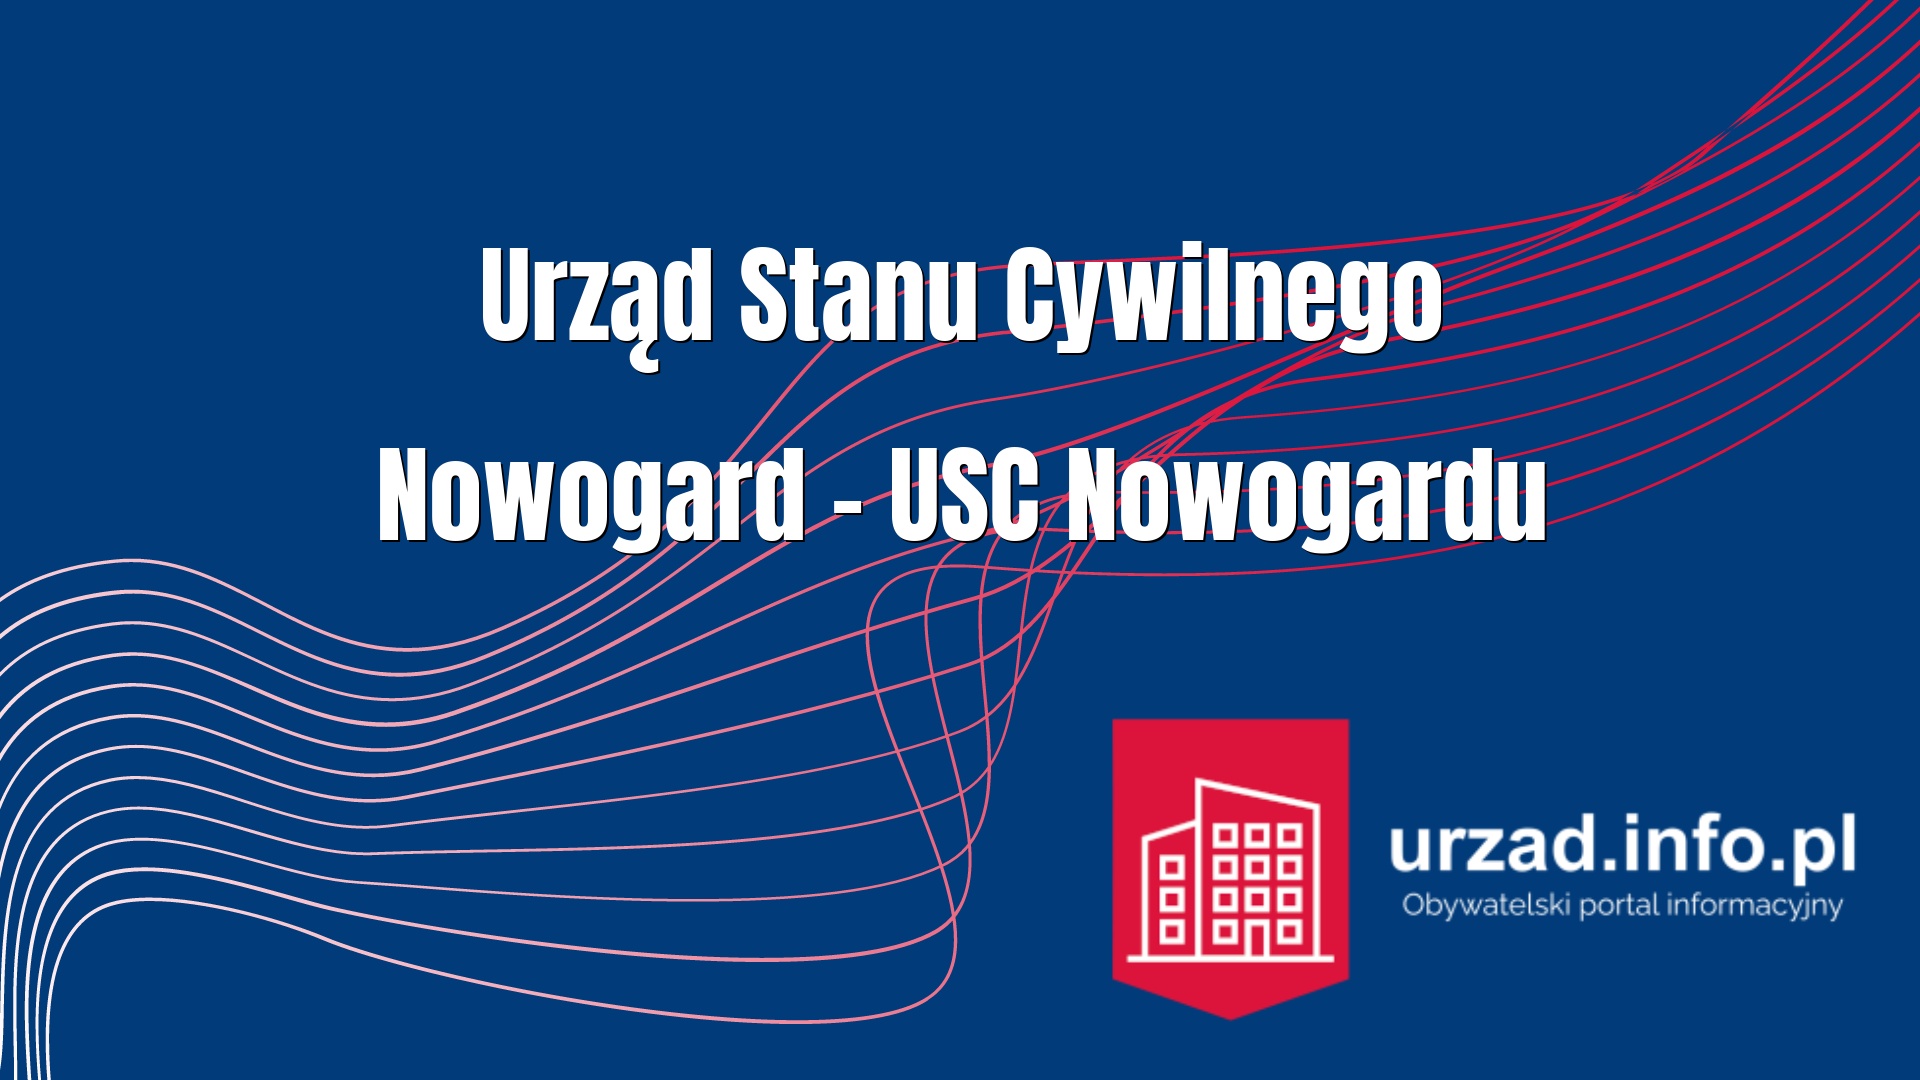 Urząd Stanu Cywilnego Nowogard – USC Nowogardu